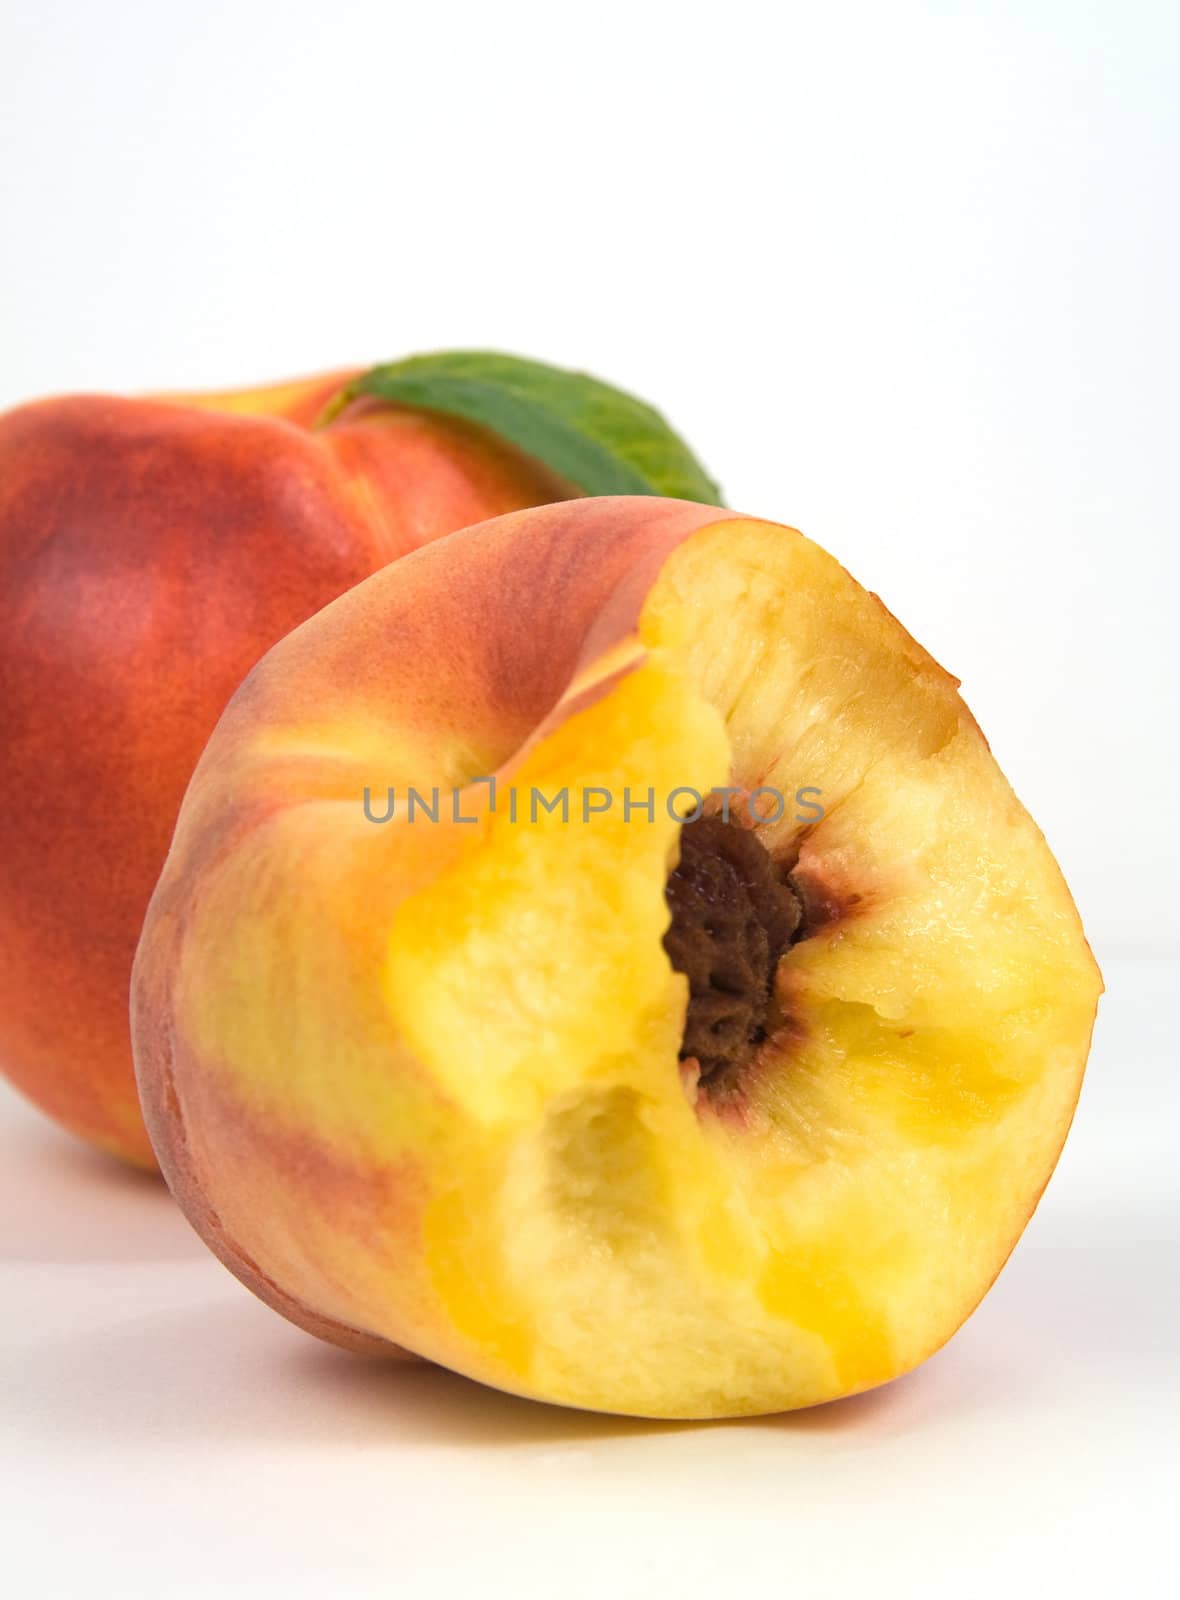 Nectarine and bited peach by serpl